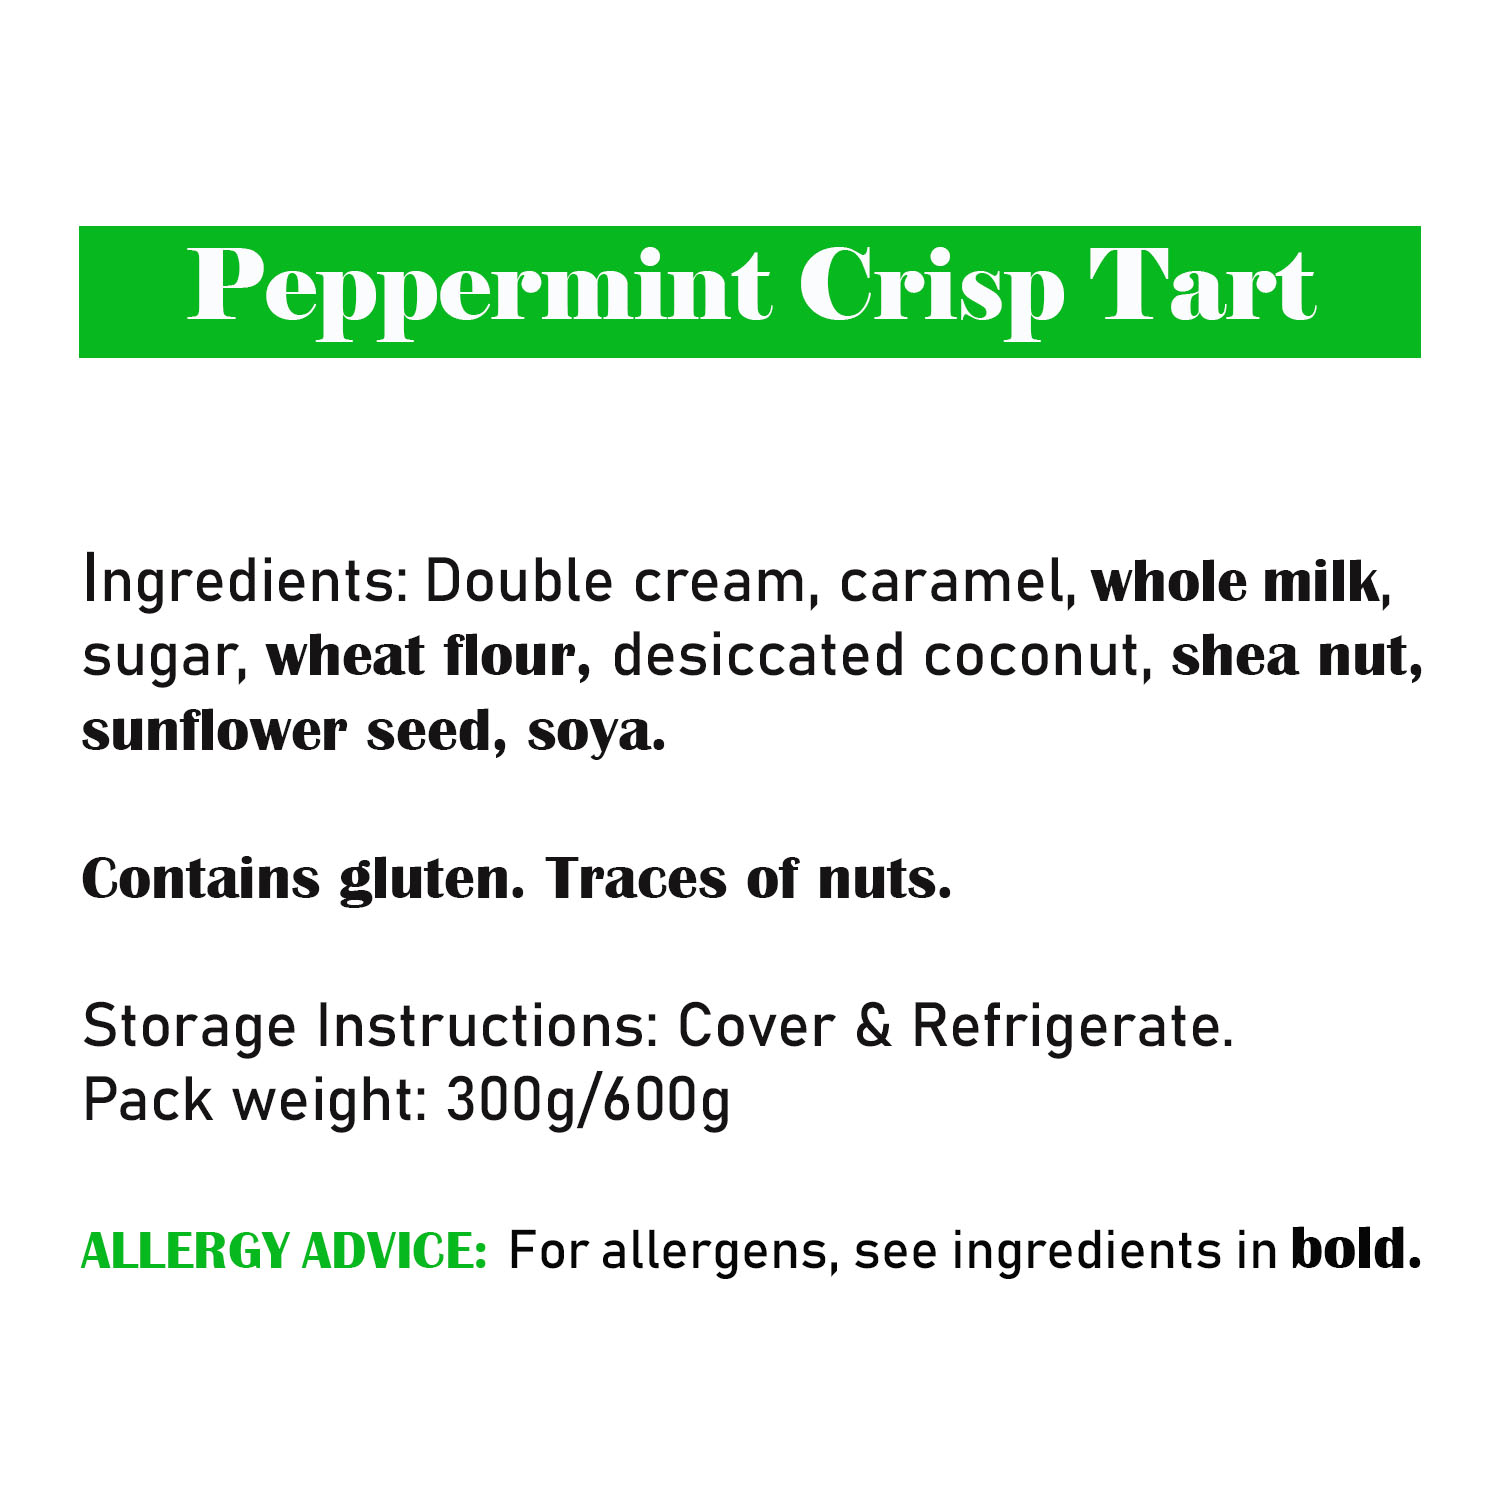 Peppermint Crisp Tart